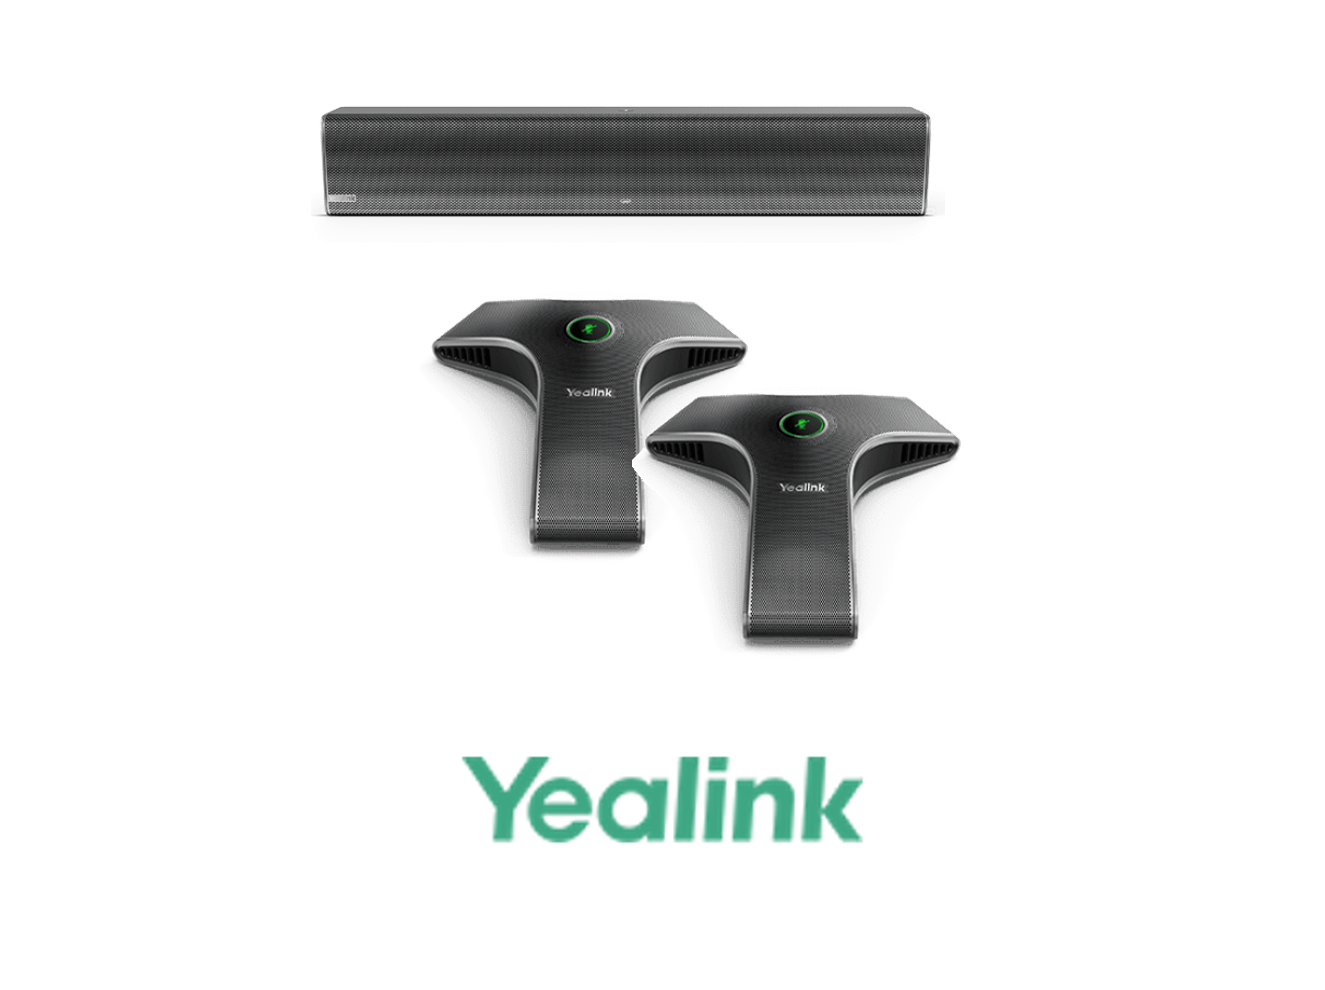 Yealink Cross Platform BYOD Video Conferencing Kit